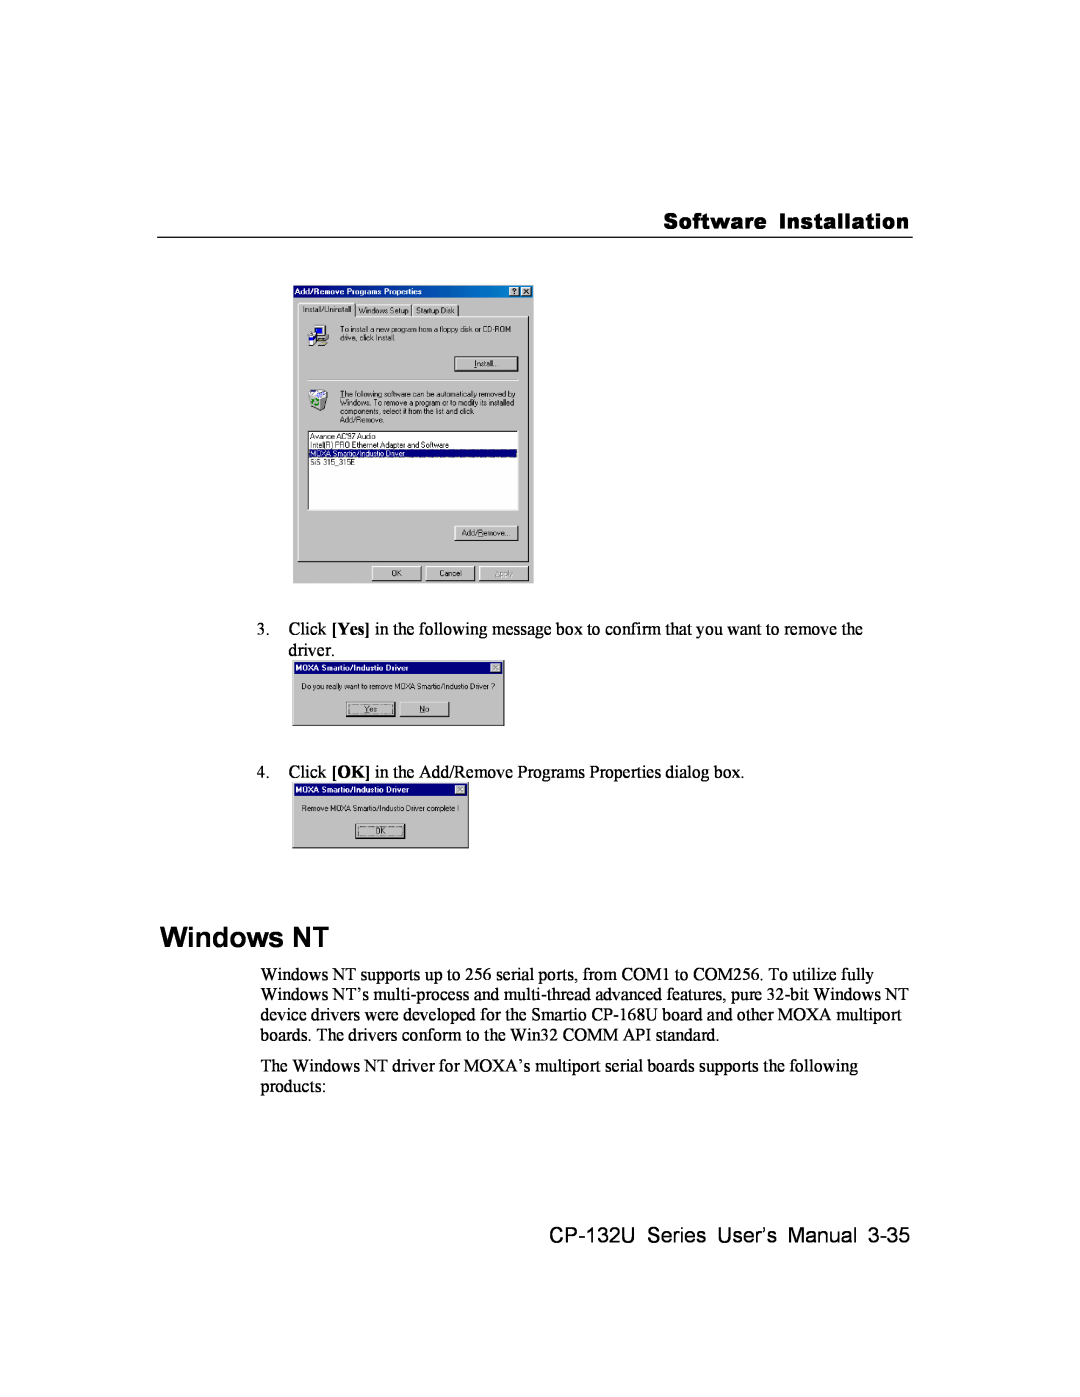 Moxa Technologies user manual Windows NT, Software Installation, CP-132U Series User’s Manual 